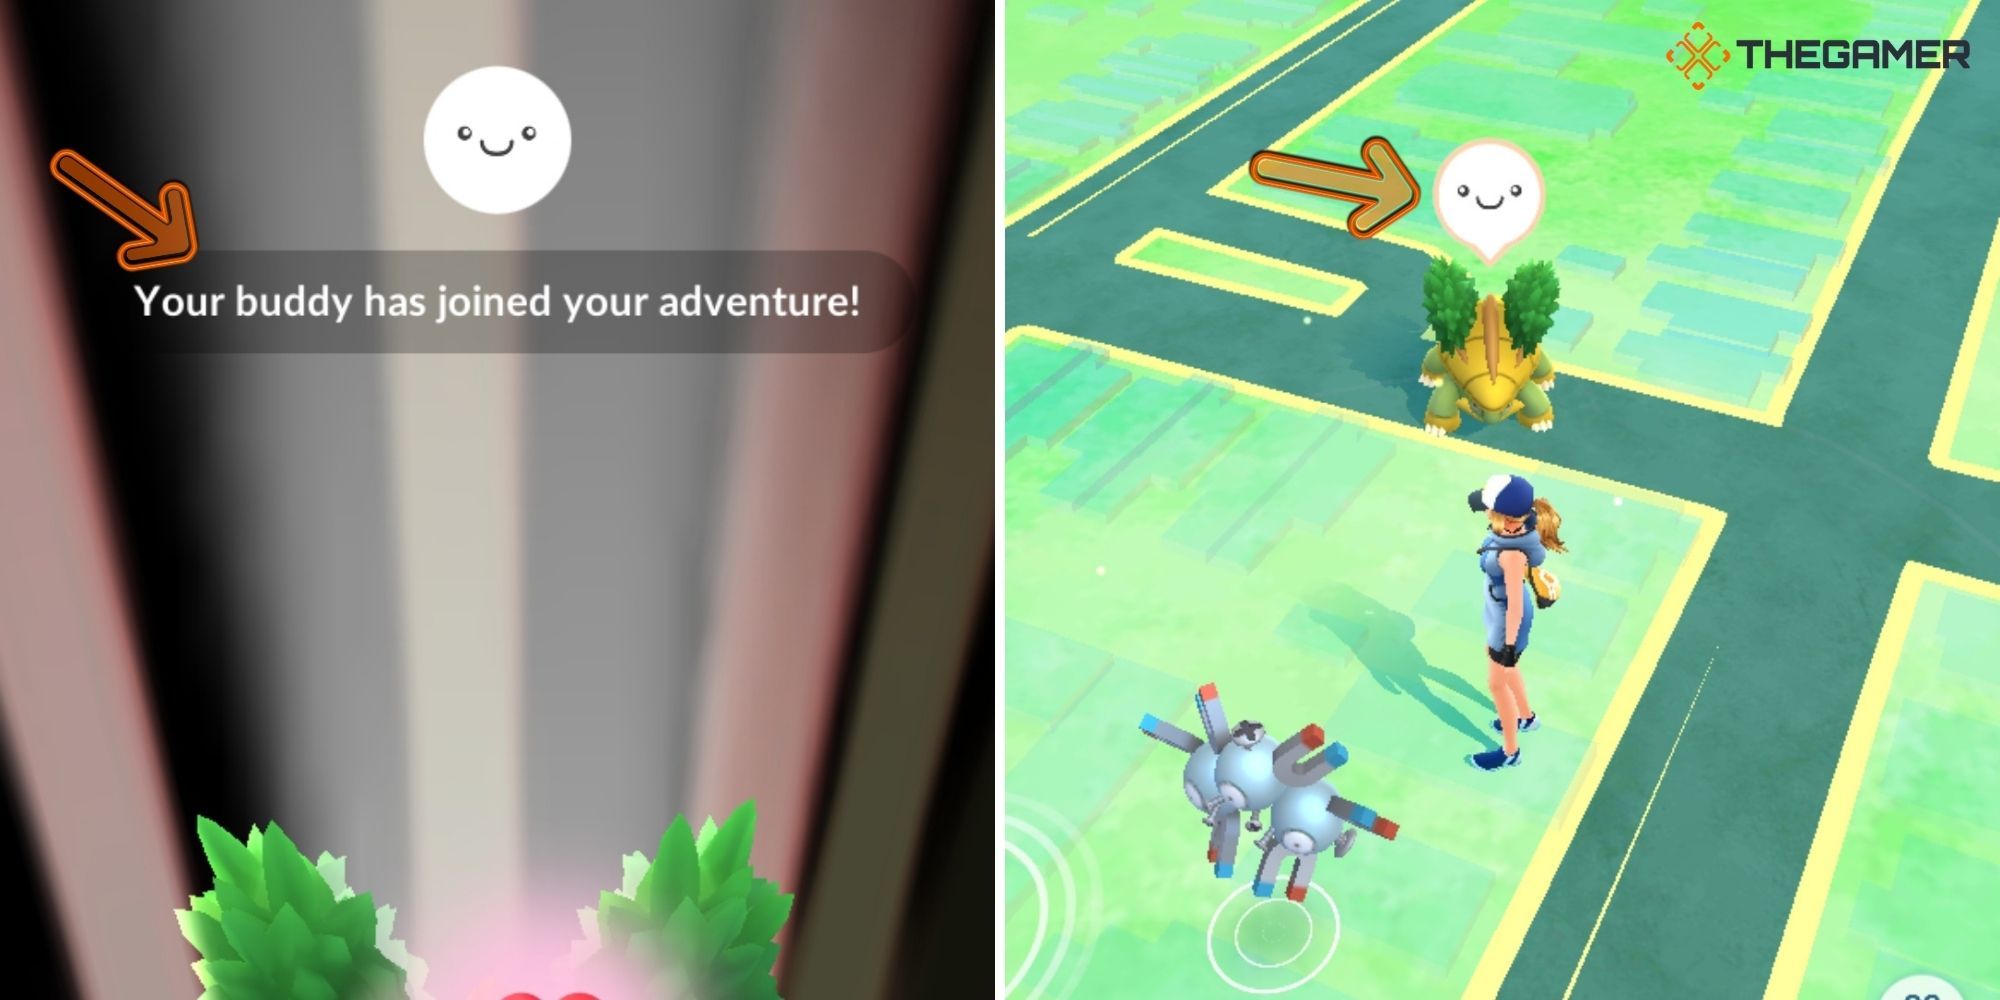 Pokemon Go - Buddy Pokemon (instructional image) (leftbuddy joining the player) (right buddy's mood on overworld)